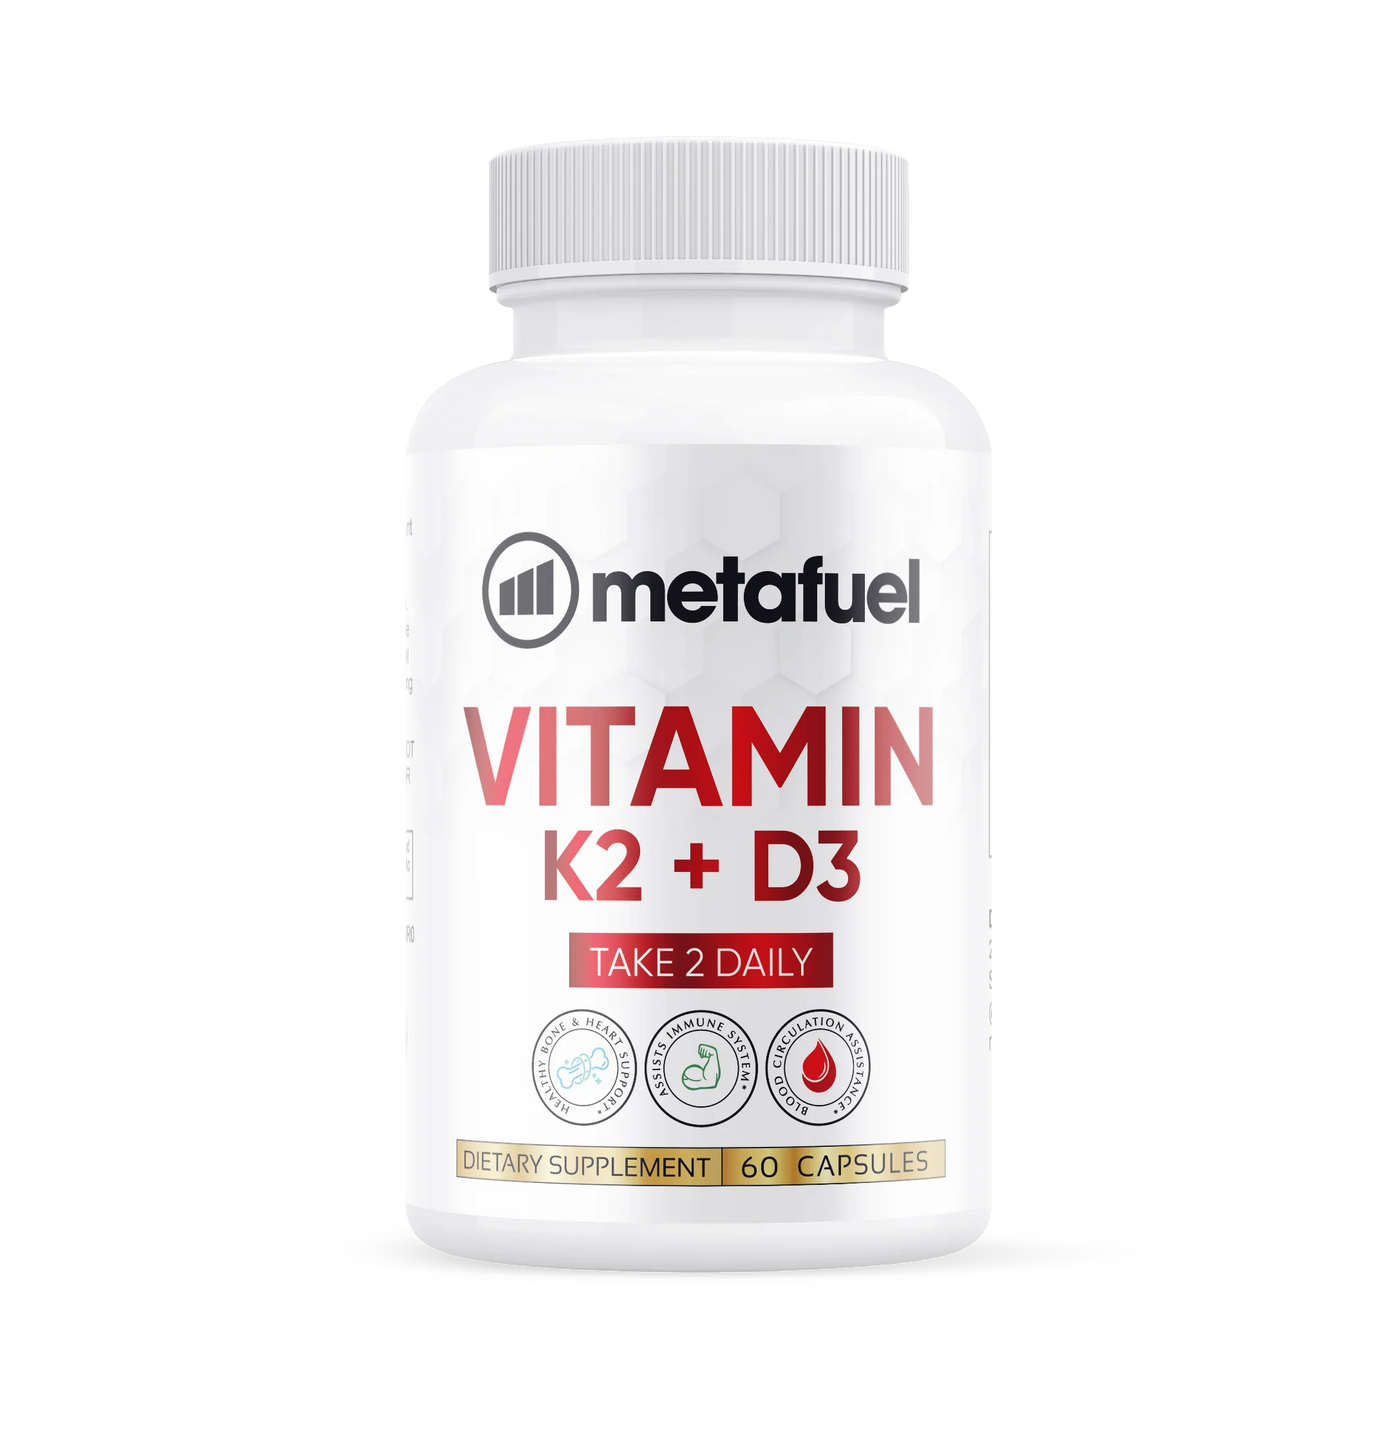 Metafuel Vitamin K2 + D3 Heart Health